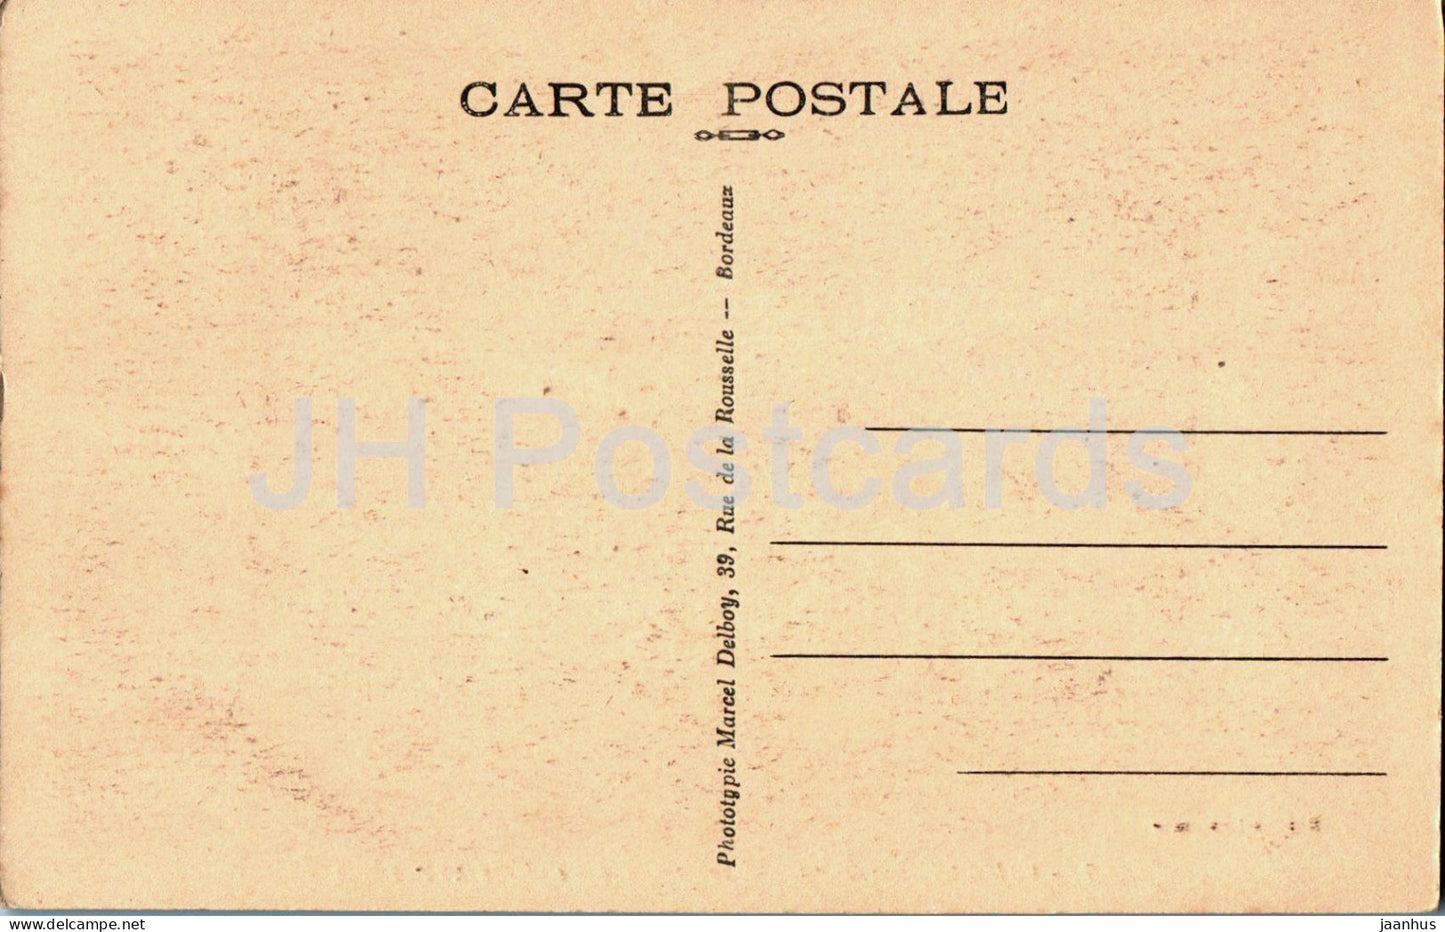 Cadouin - Interieur des Cloitres - Innenraum des Kreuzgangs - 7 - alte Postkarte - Frankreich - unbenutzt